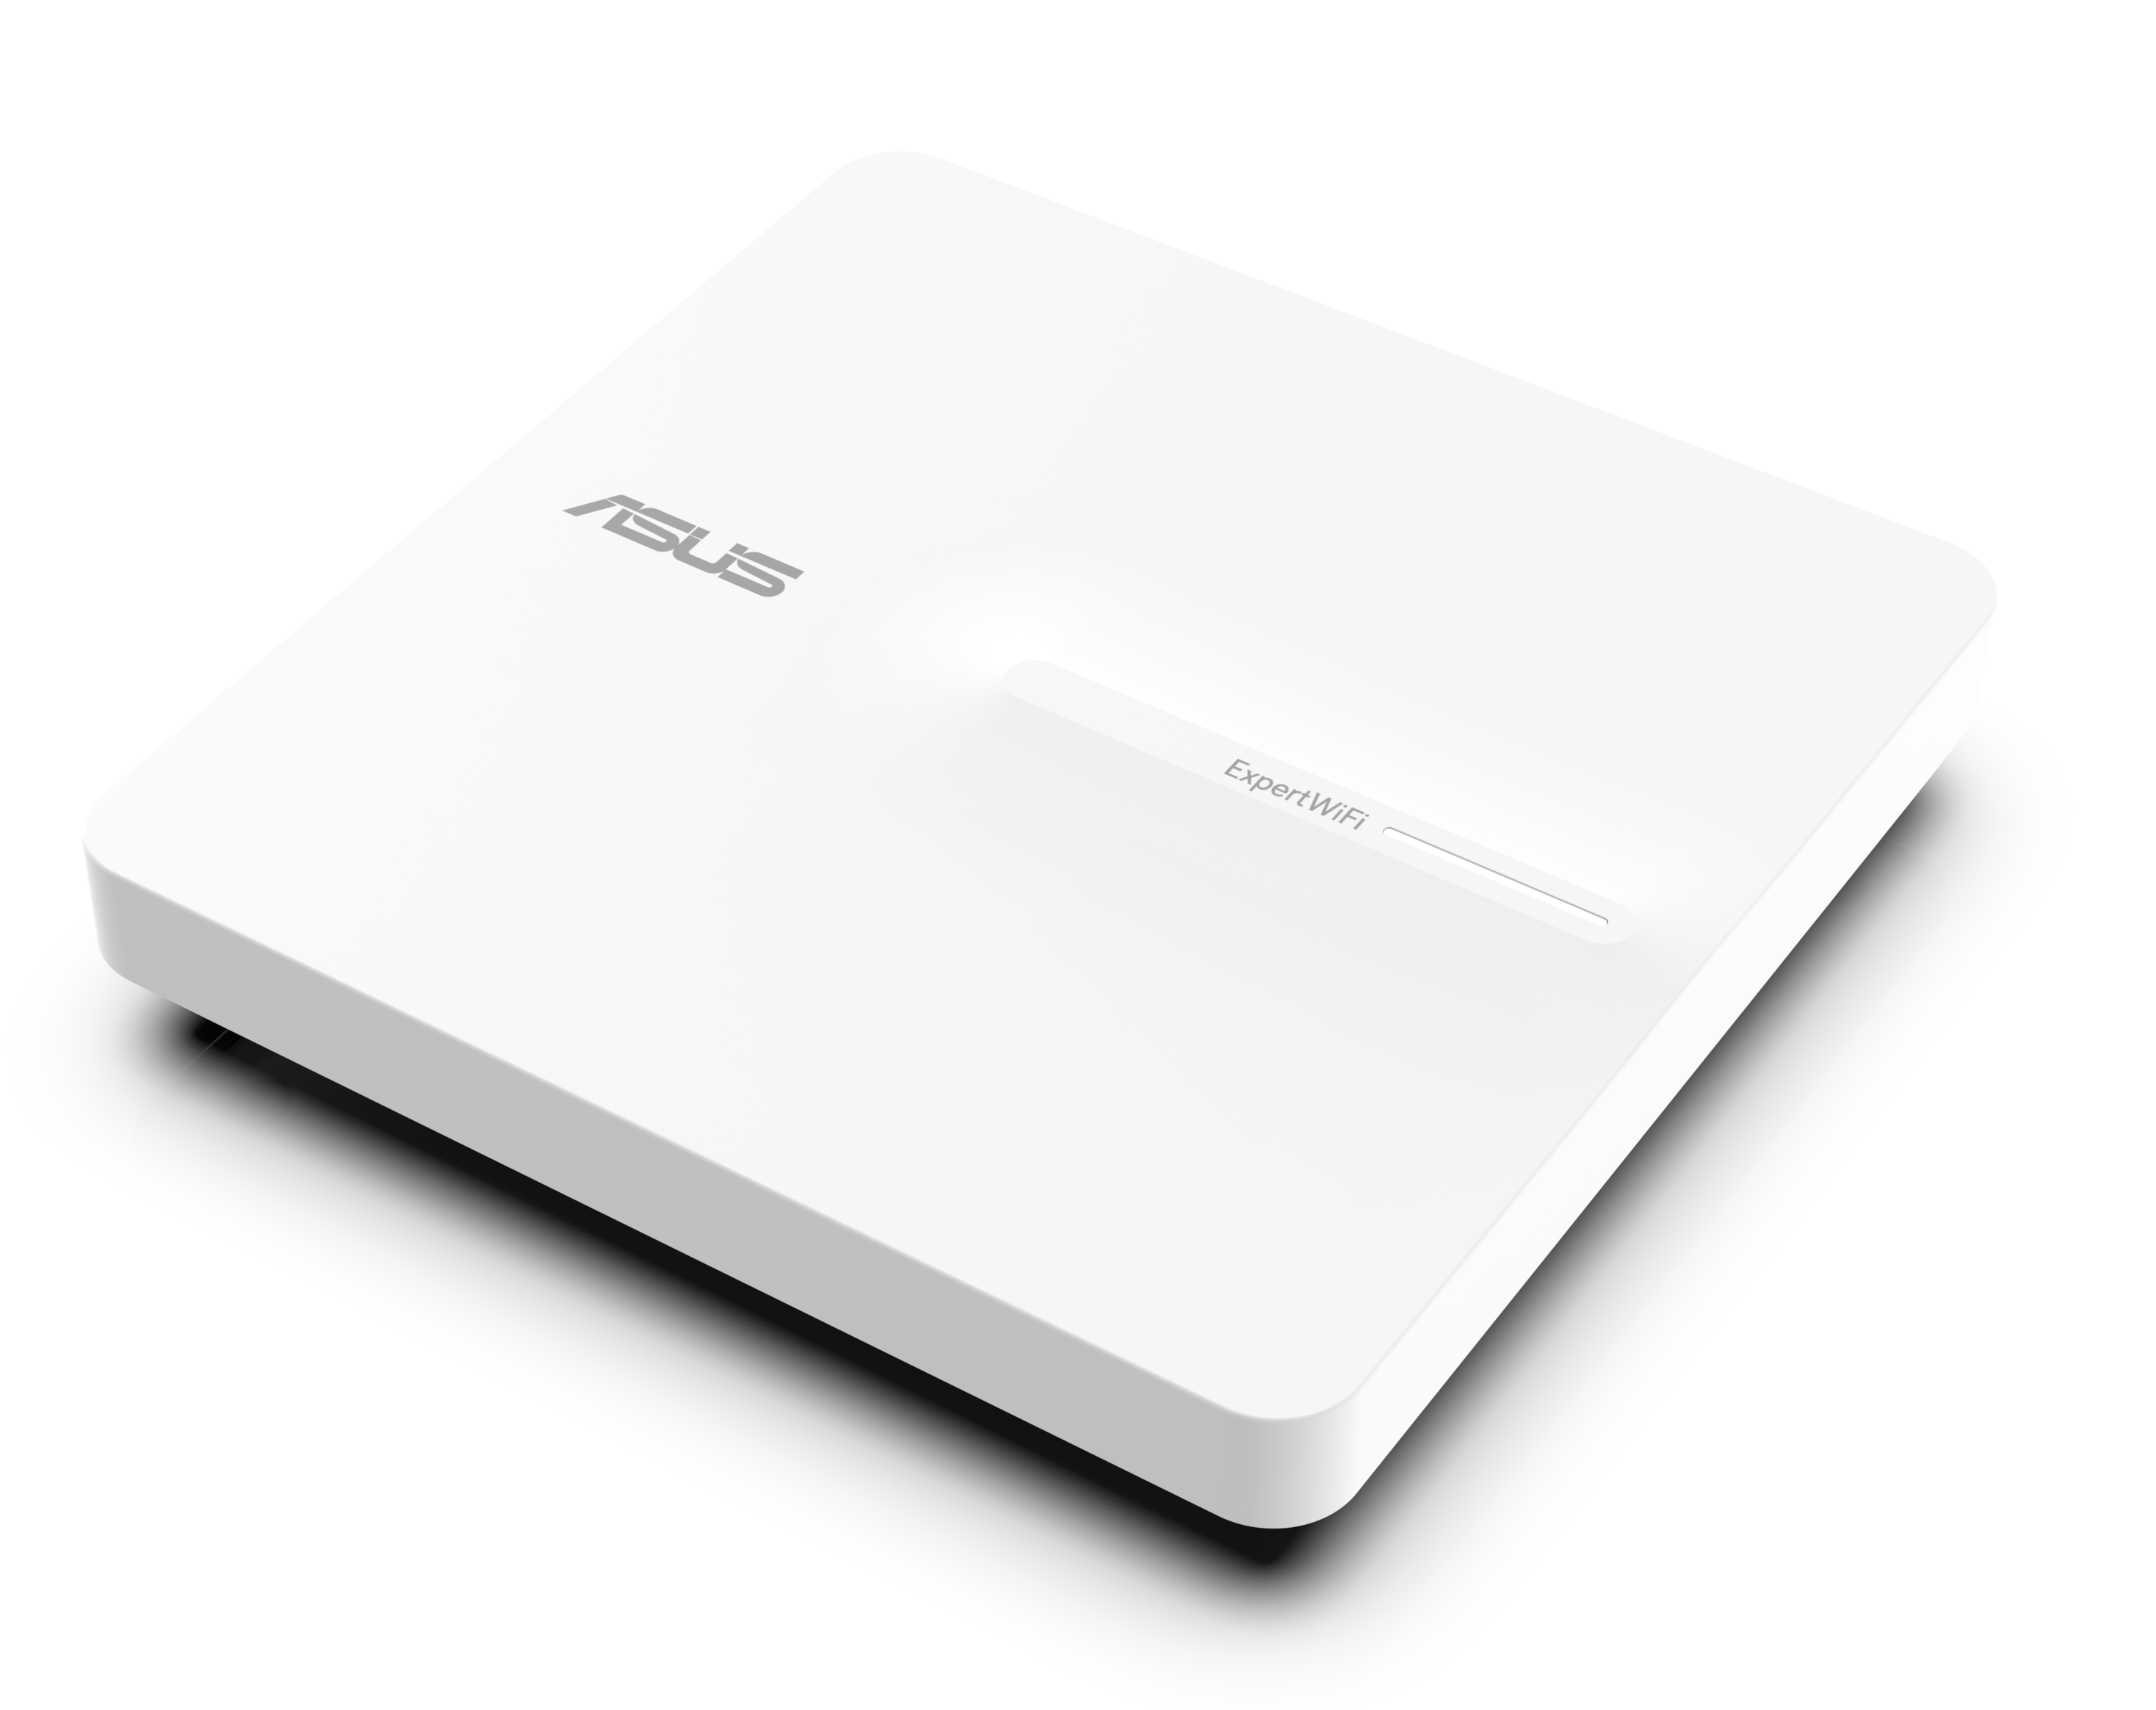 Asus - ASUS ExpertWiFi EBA63 AX3000 Dual-Band WiFi 6 (802.11ax) PoE Access Point